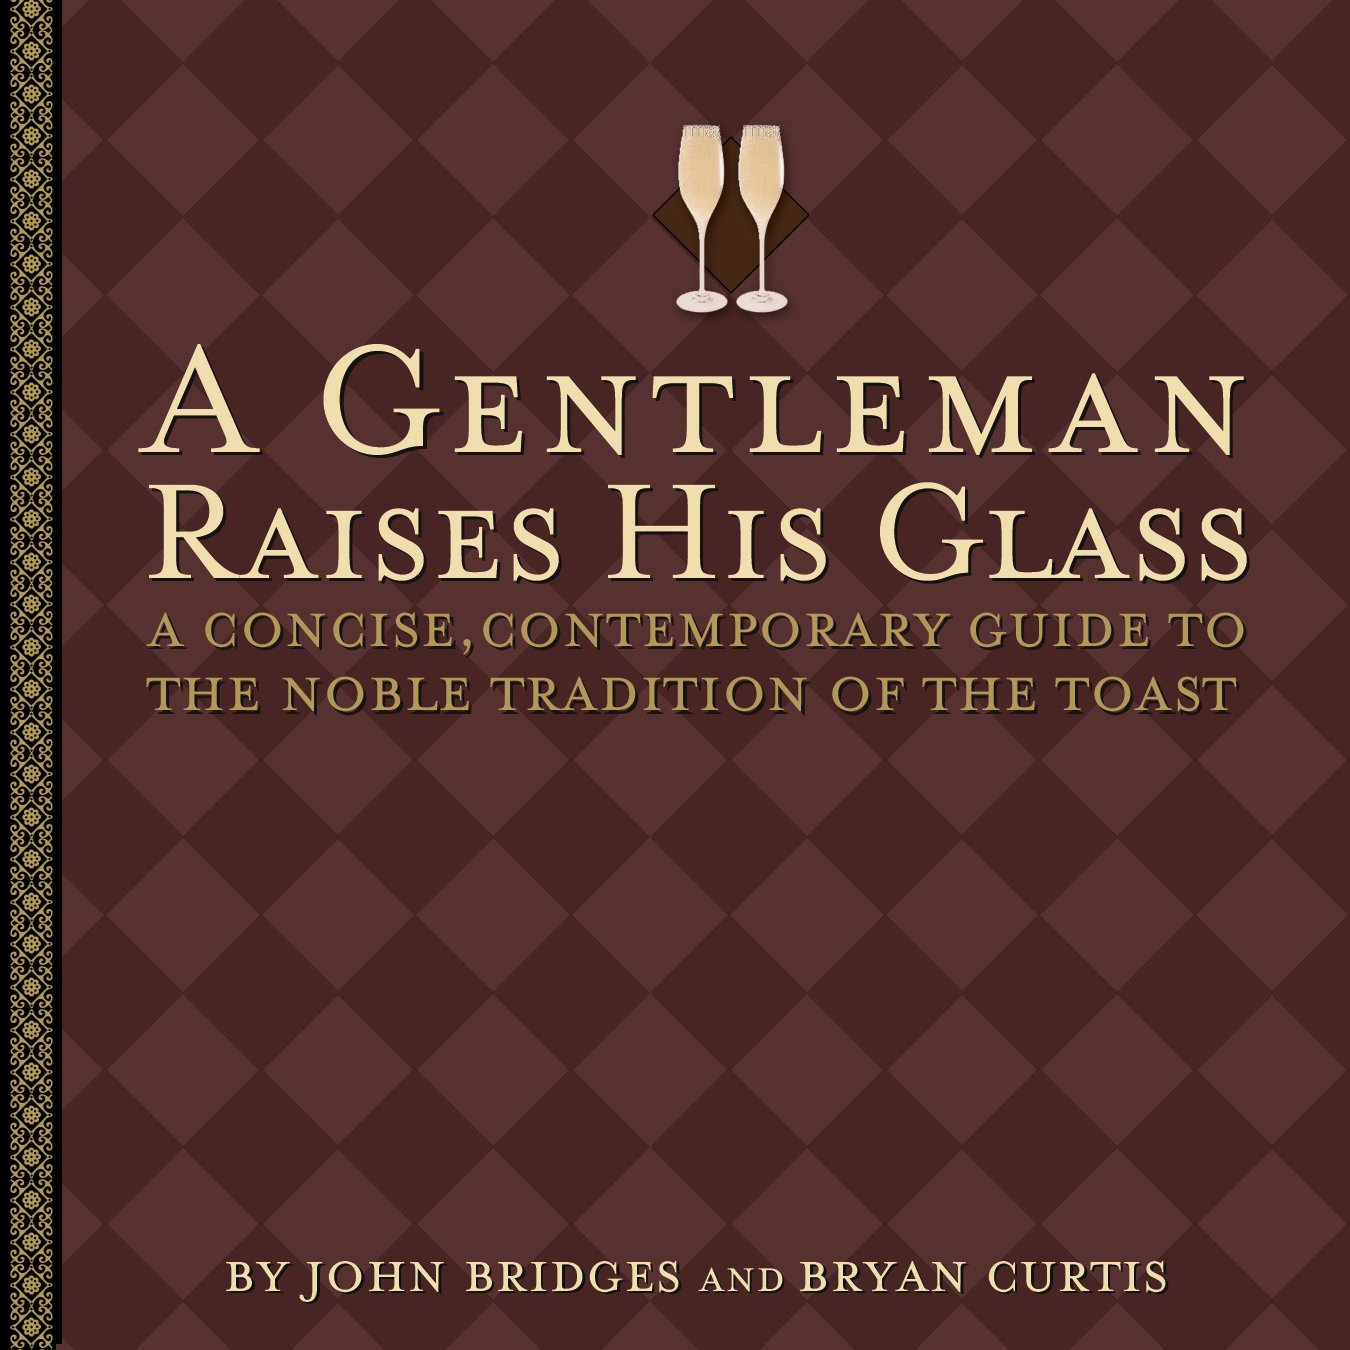 A Gentleman raises his glass